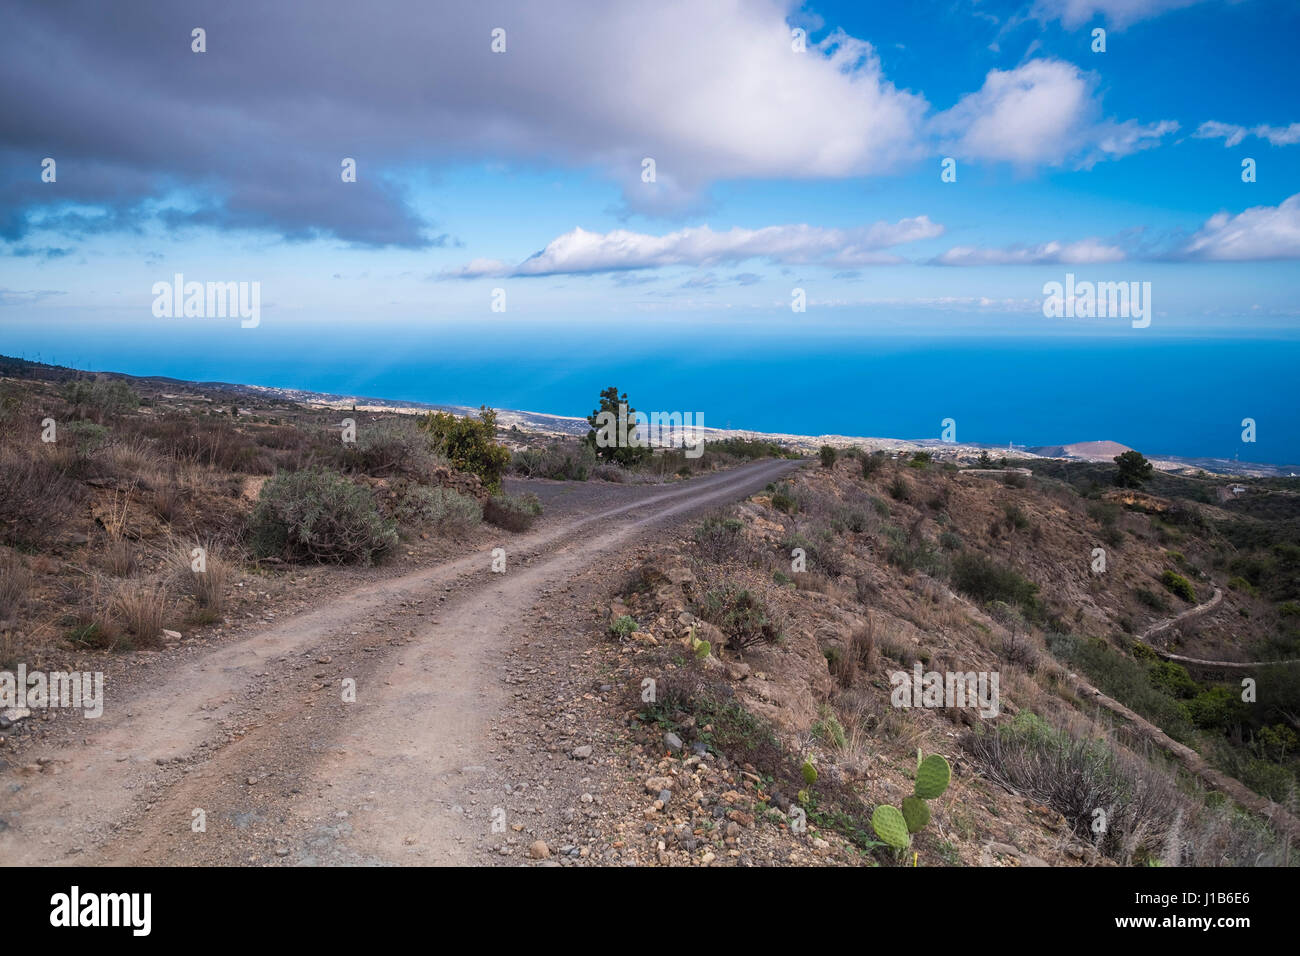 Dirt path near ocean, Arona, Tenerife, Spain Stock Photo